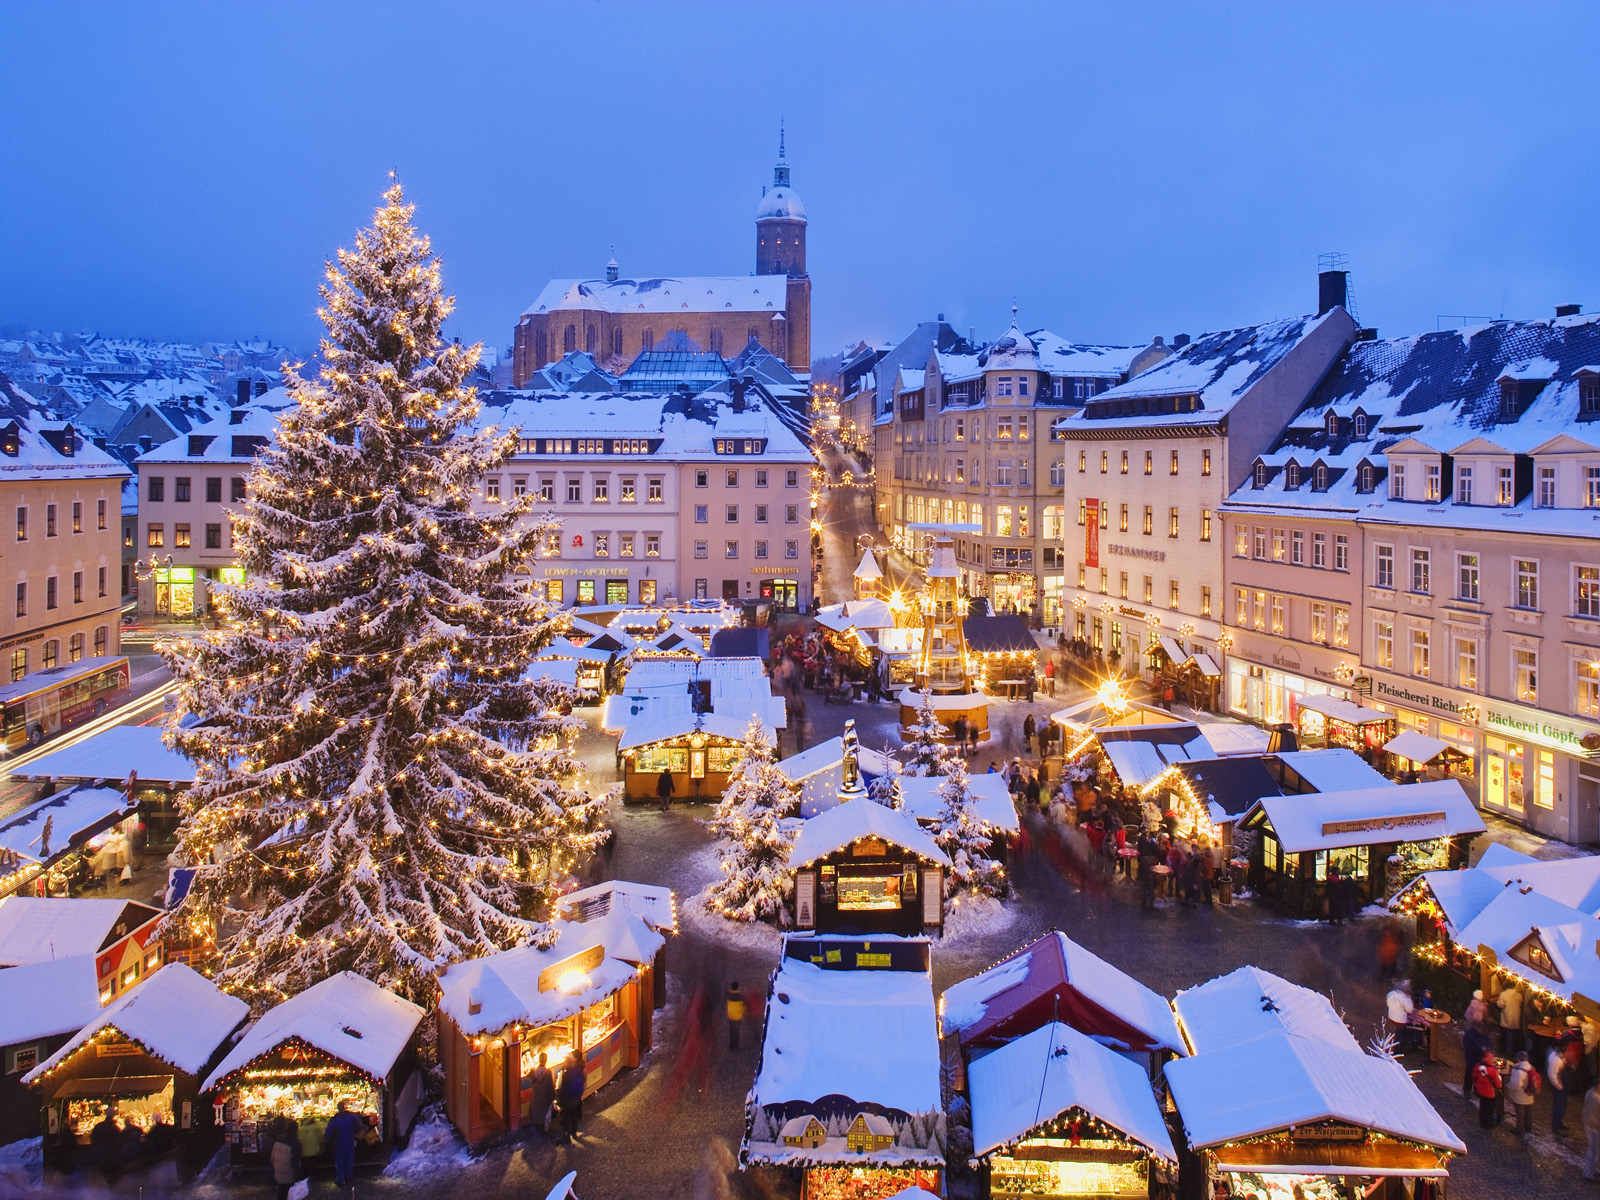 Holiday Deals, Cheap Flights & City Breaks – Our 5 Top Winter Destinations